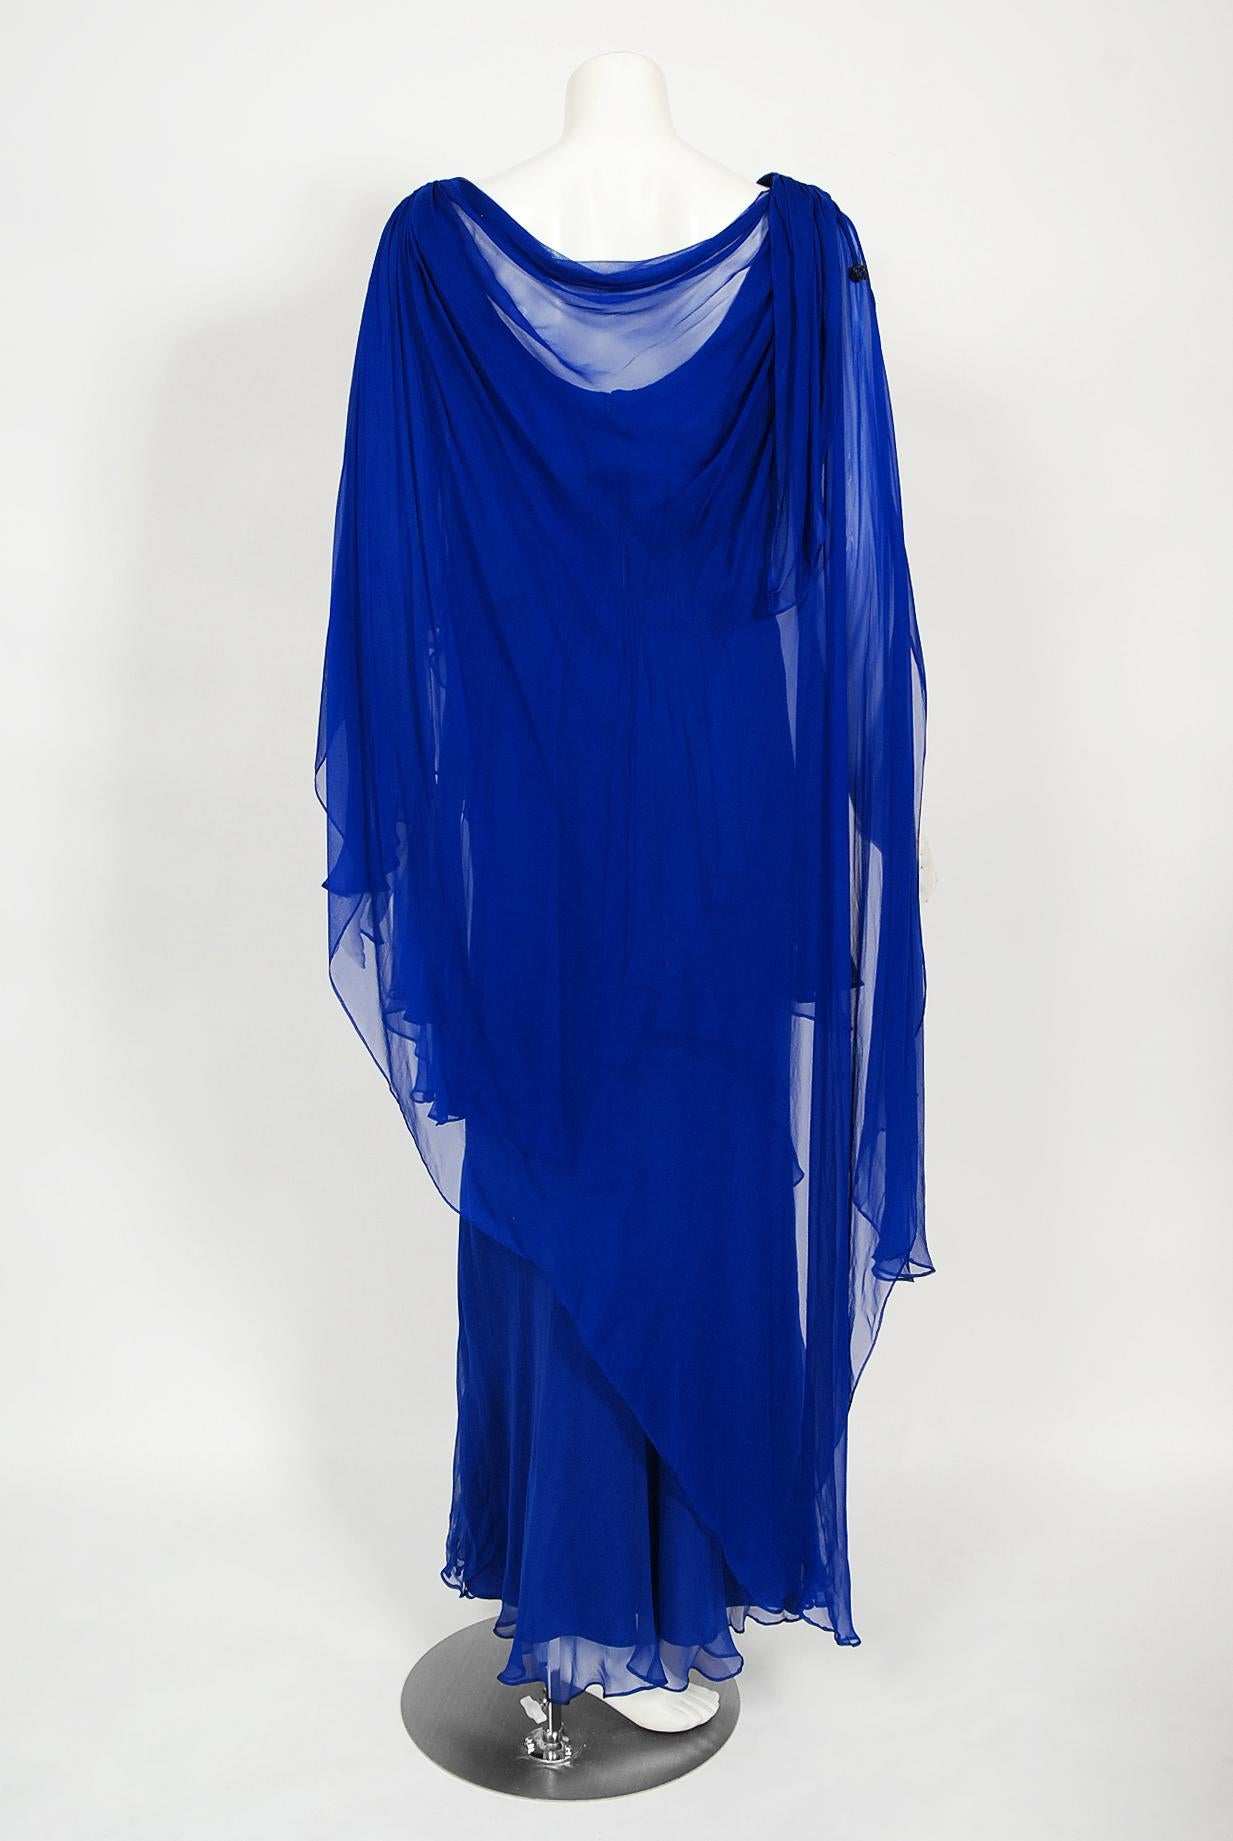 Vintage 1967 Givenchy Haute Couture Cobalt Blue Draped Silk Chiffon Caftan Gown For Sale 8